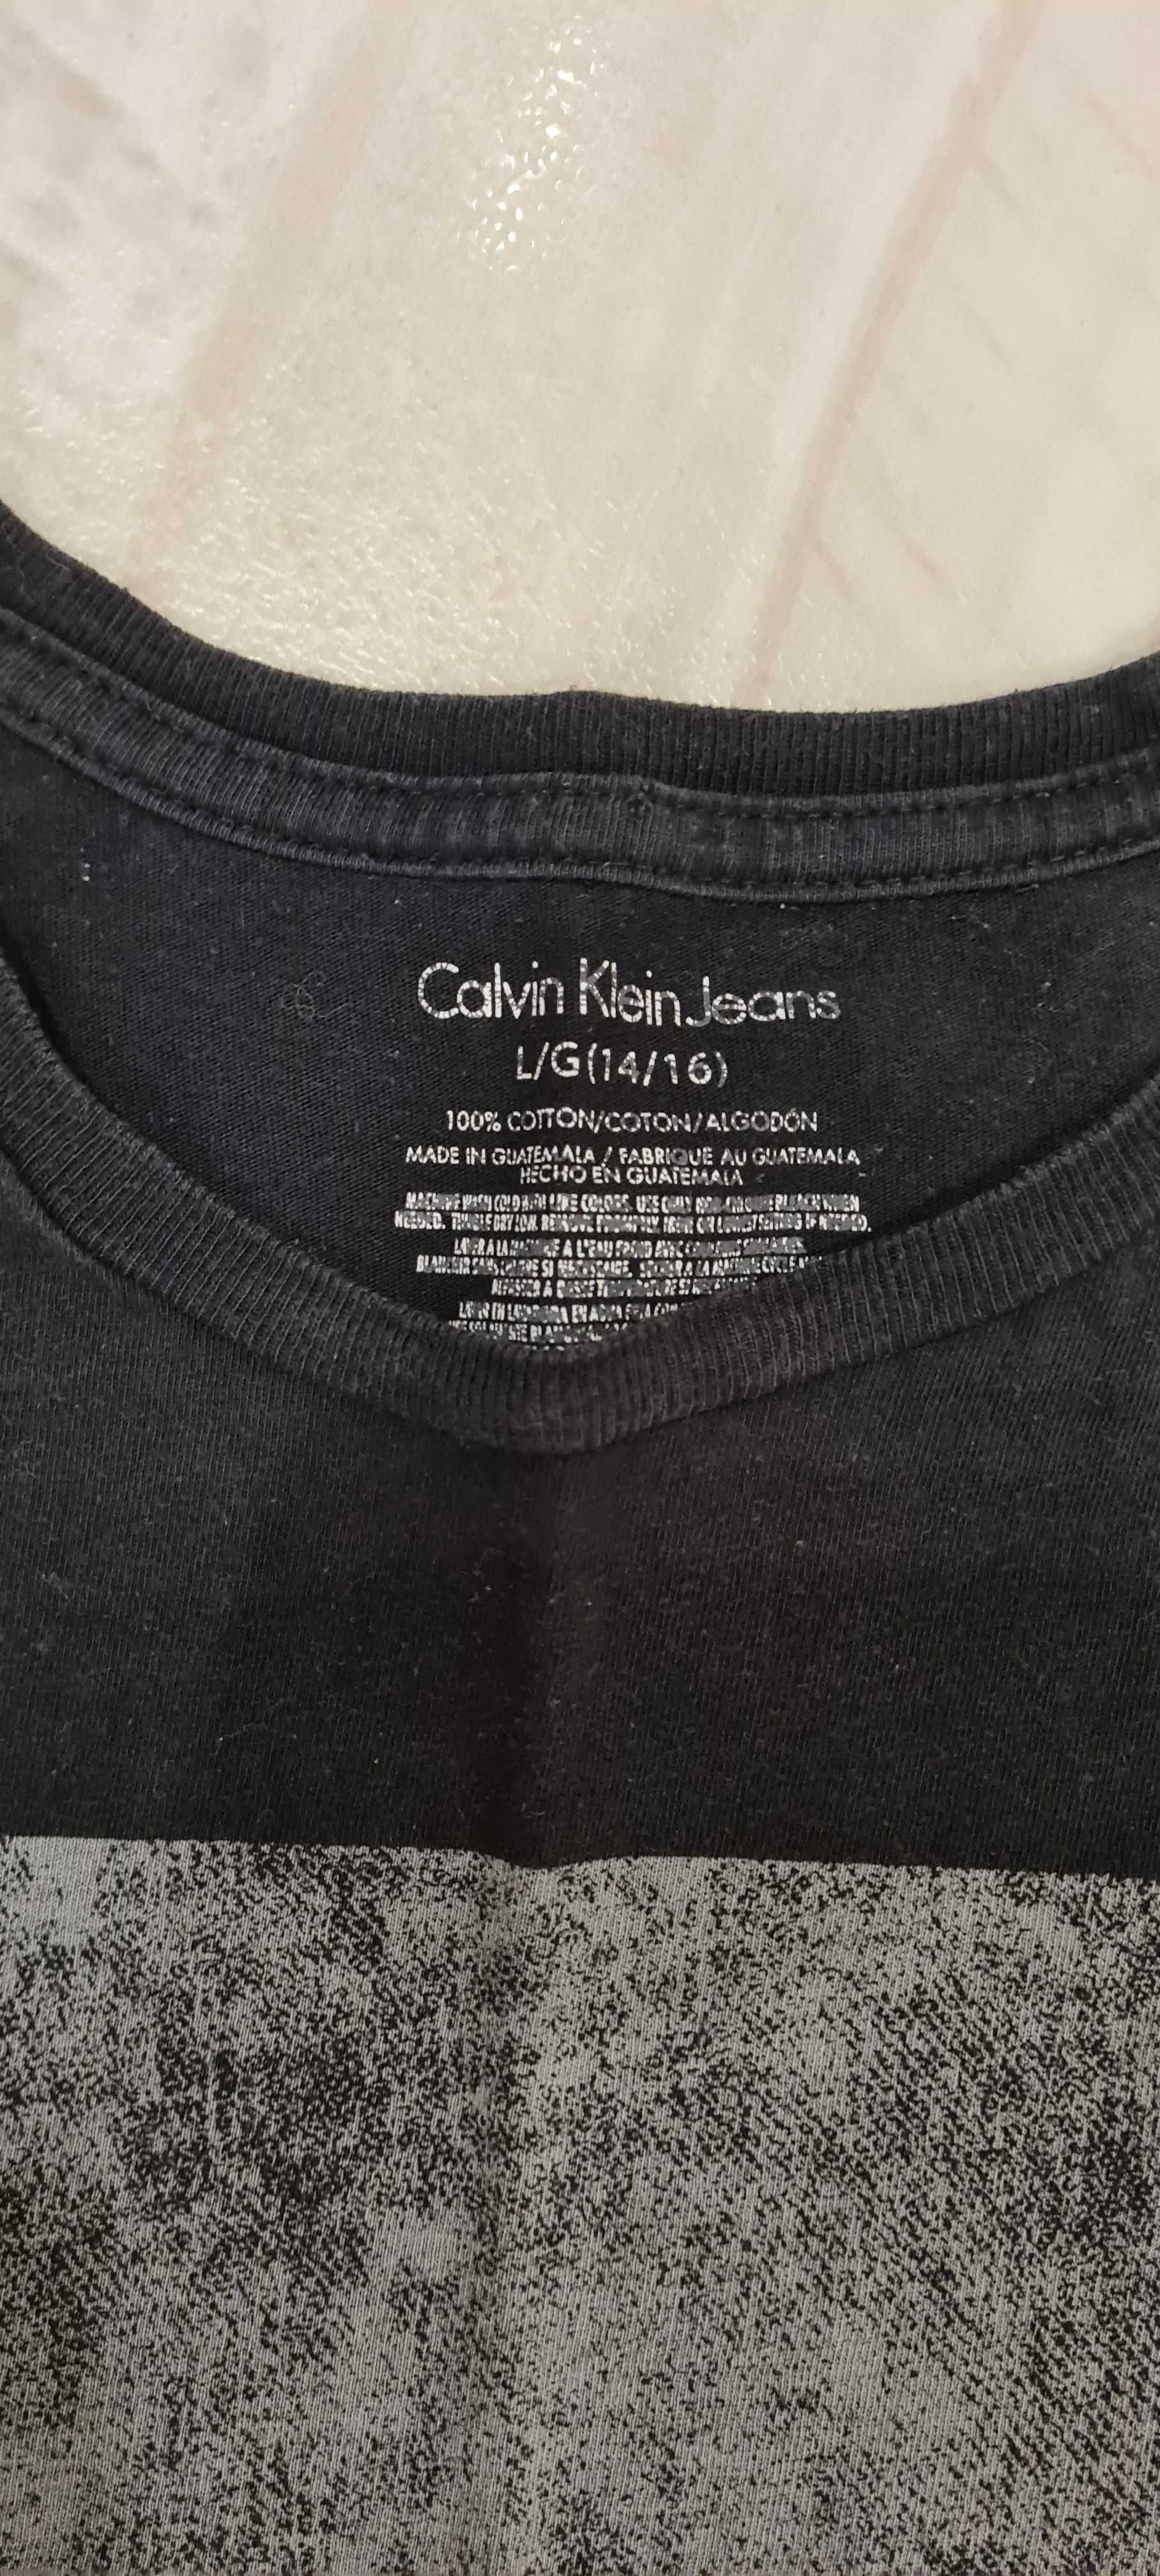 CALVIN KLEIN JEANS T-shirt Koszulka Podkoszulka Podkoszulek Chłopięca